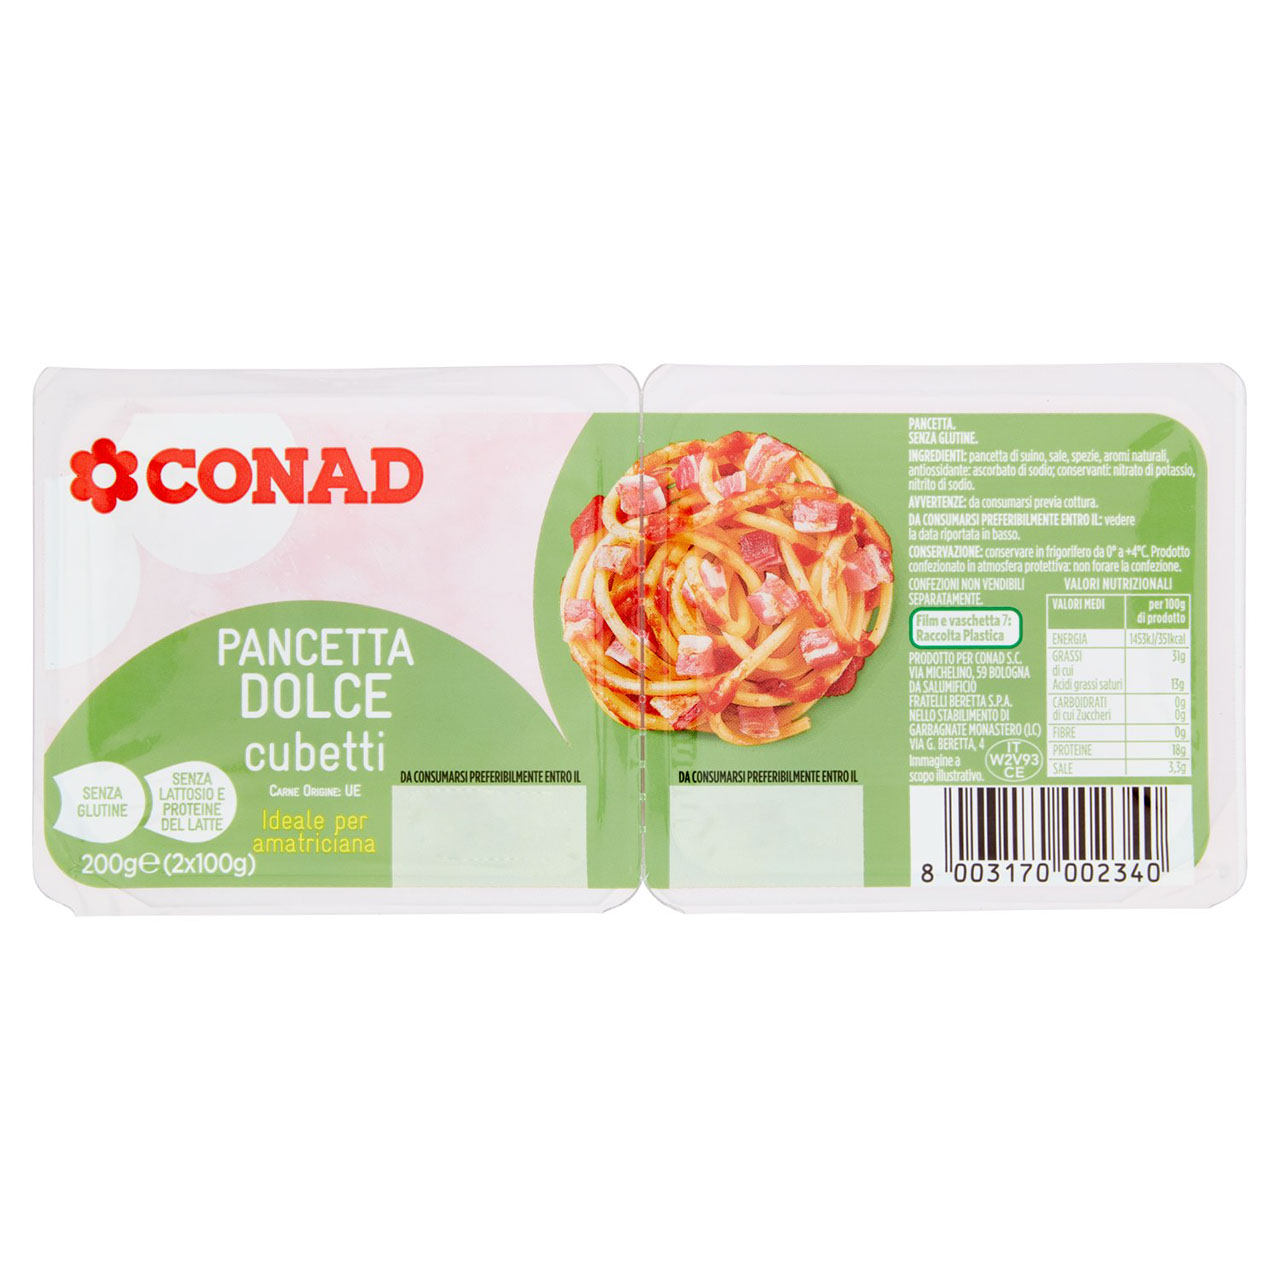 Pancetta Dolce cubetti 2 x 100 g Conad online